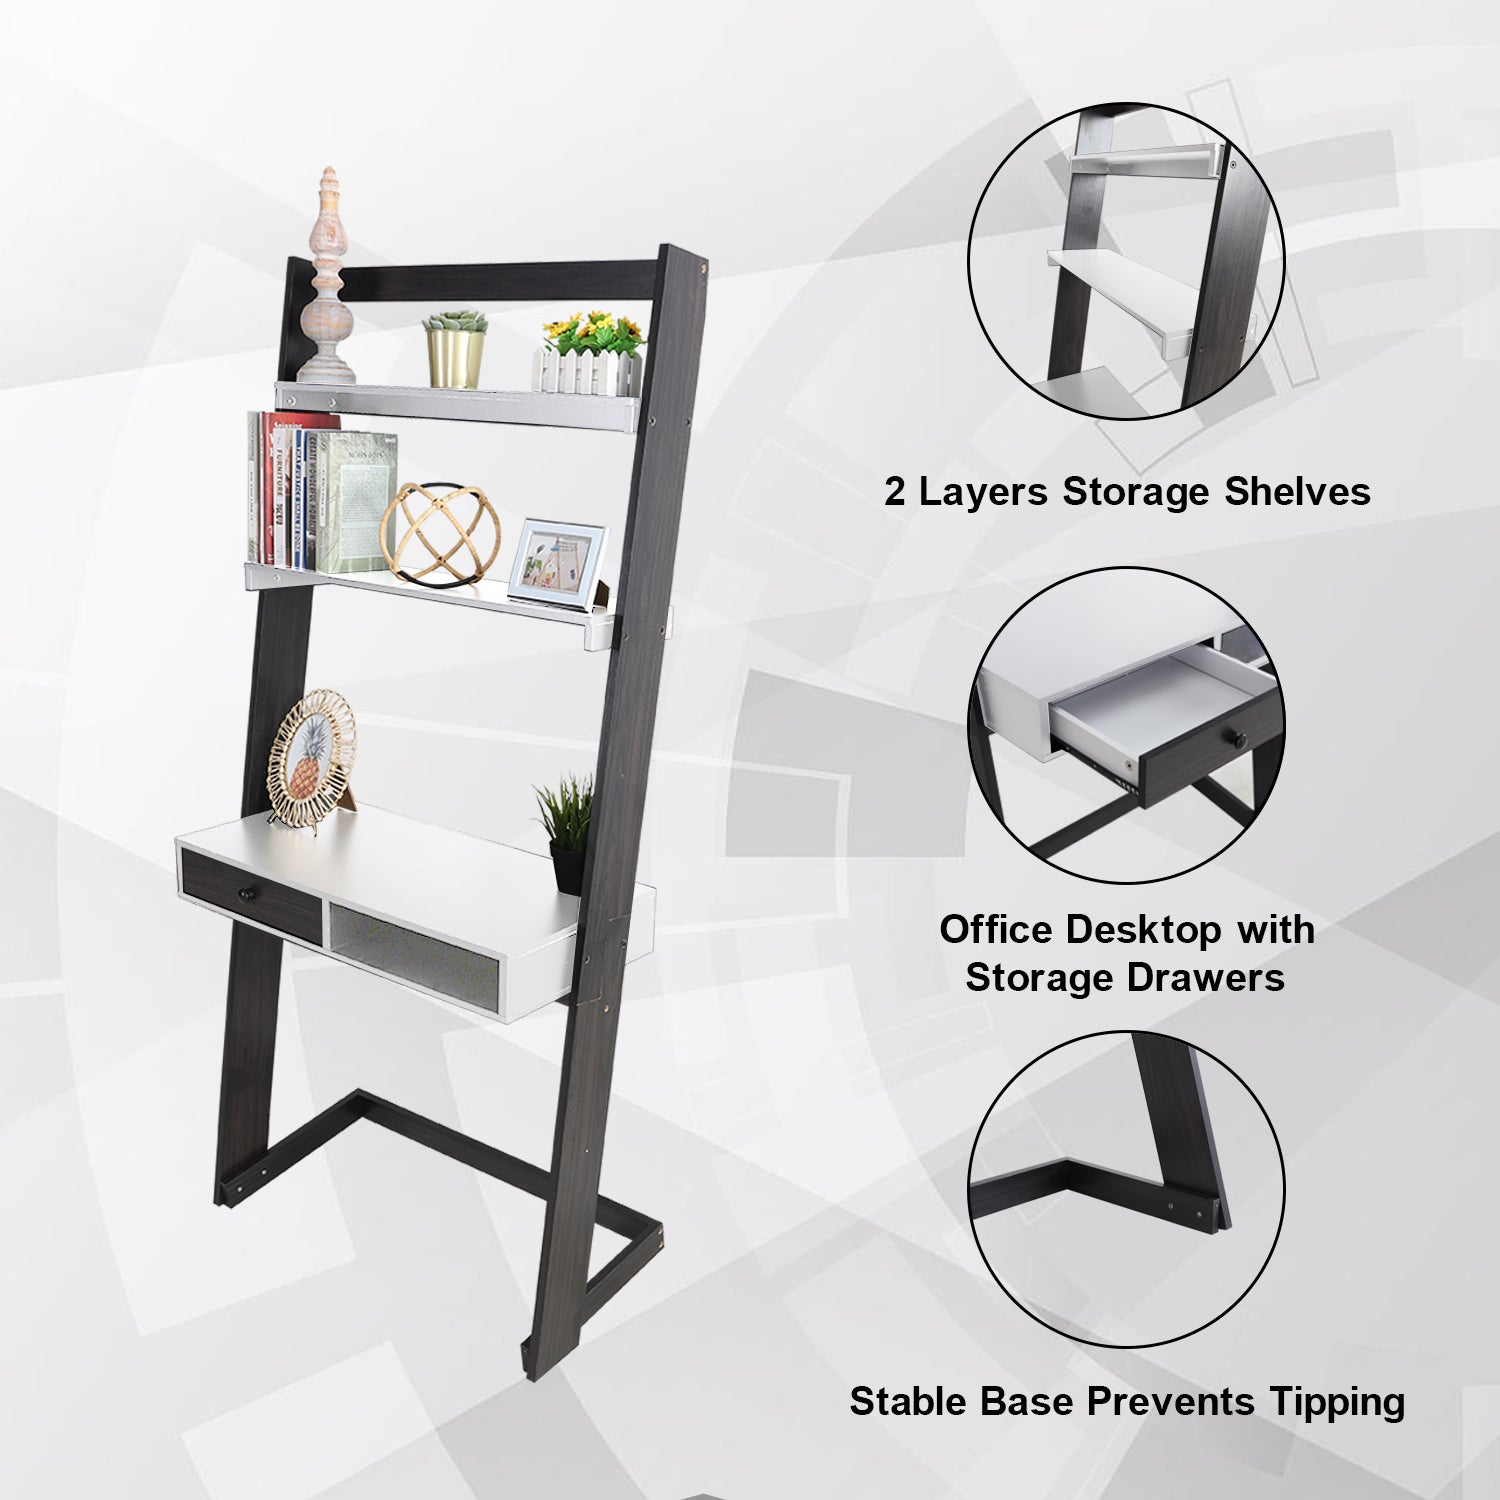 PHI VILLA 3-Tier Ladder Shelf Bookcase with Desktop and Drawer